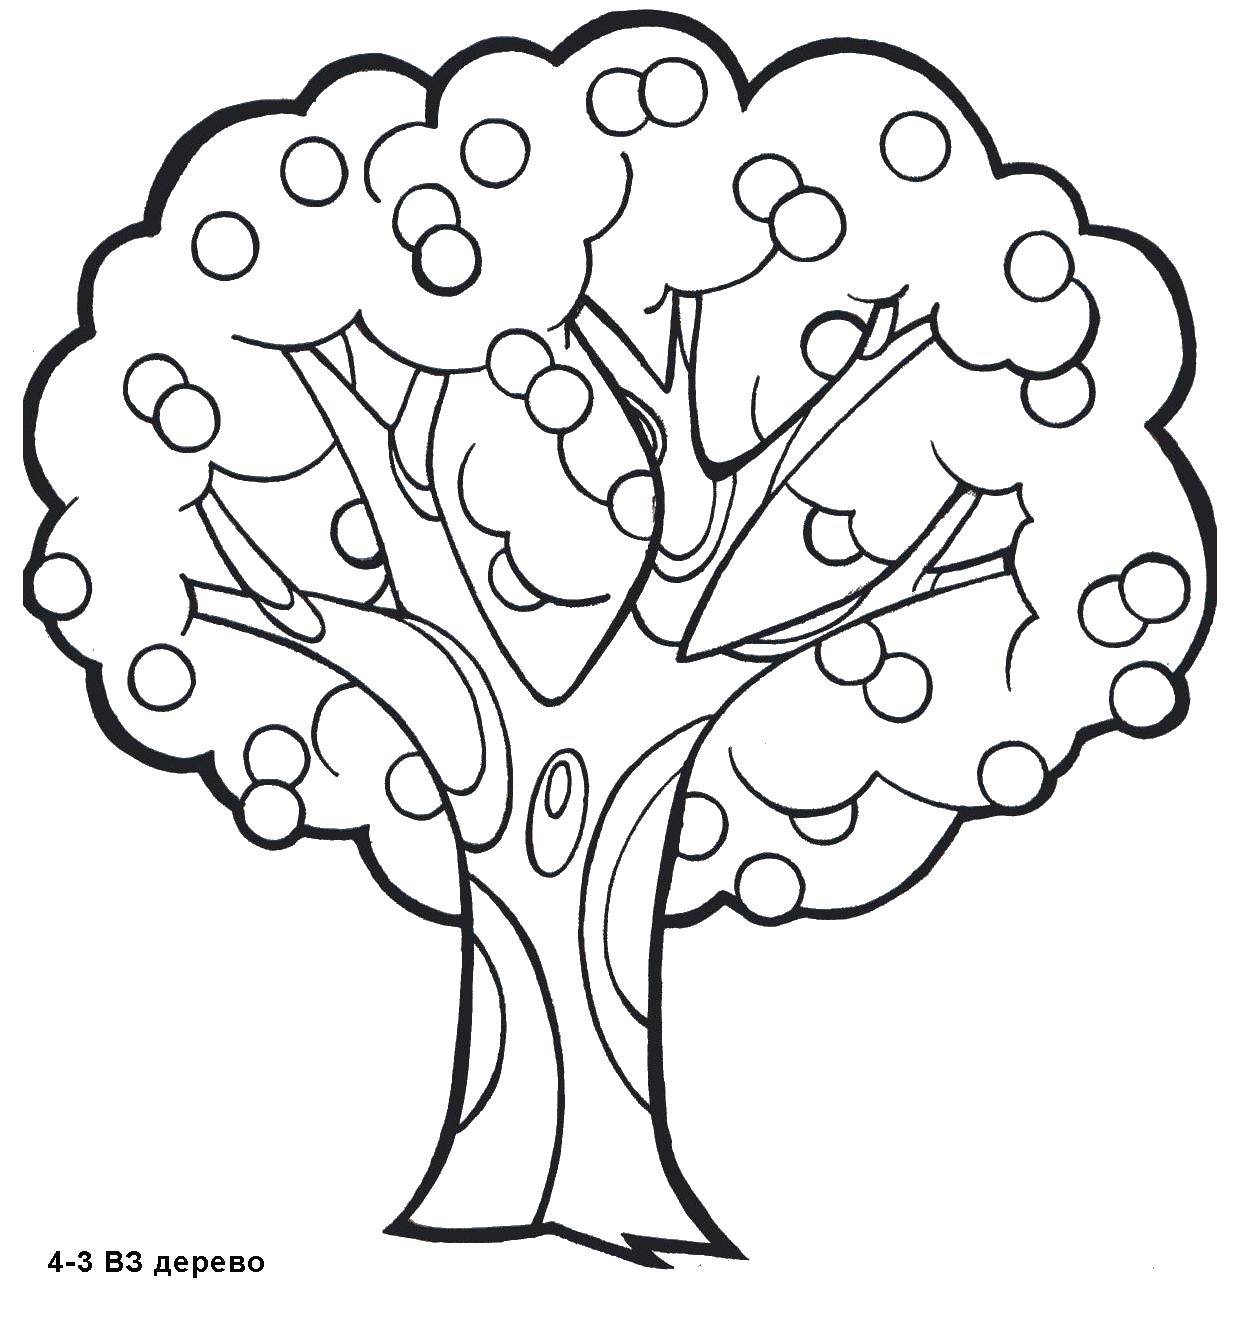 Название: Раскраска Дерево с плодами. Категория: дерево. Теги: дерево.